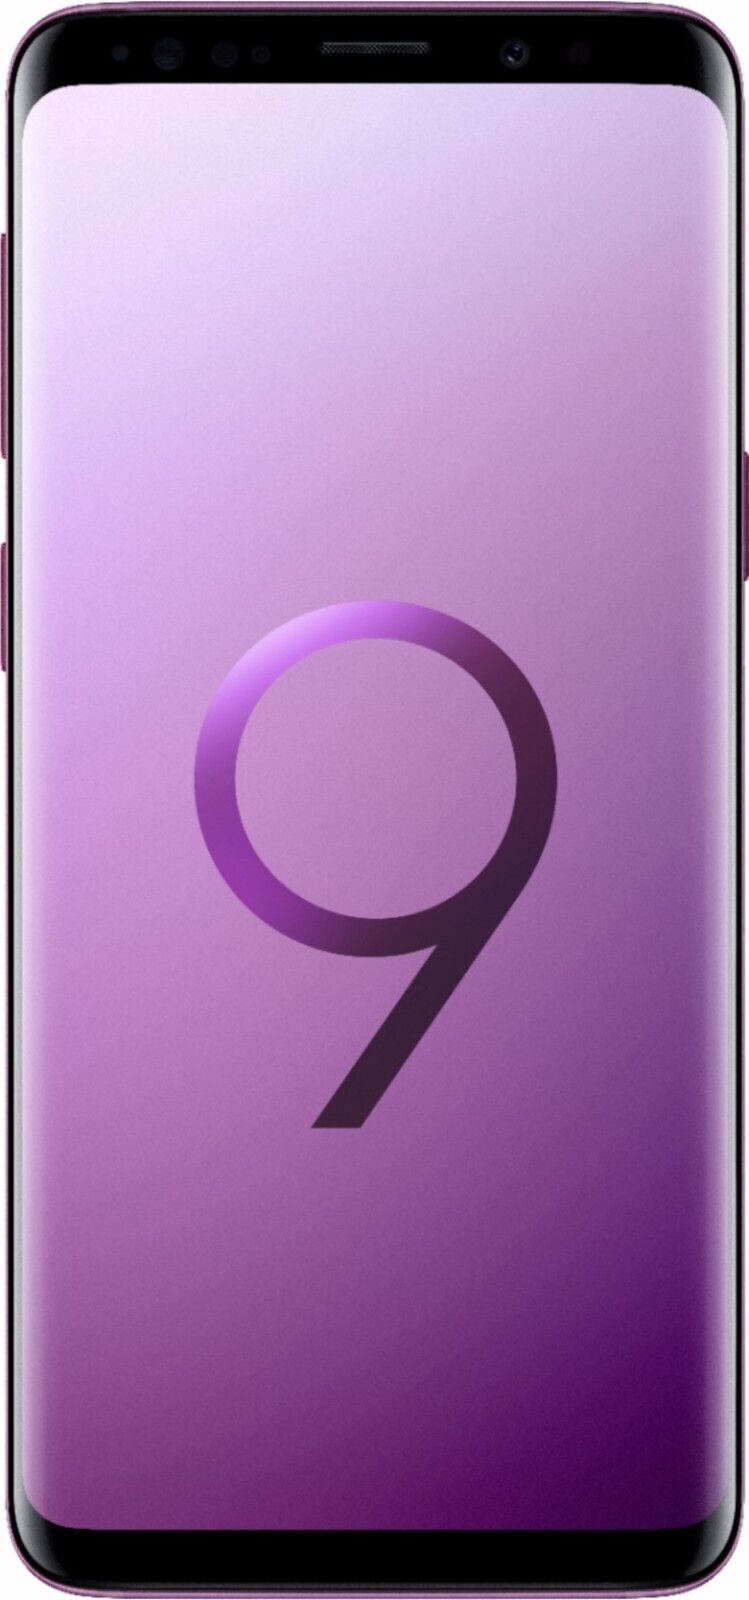 Galaxy S9 64GB (Dual Sim) - Purple - Fully unlocked (GSM & CDMA)